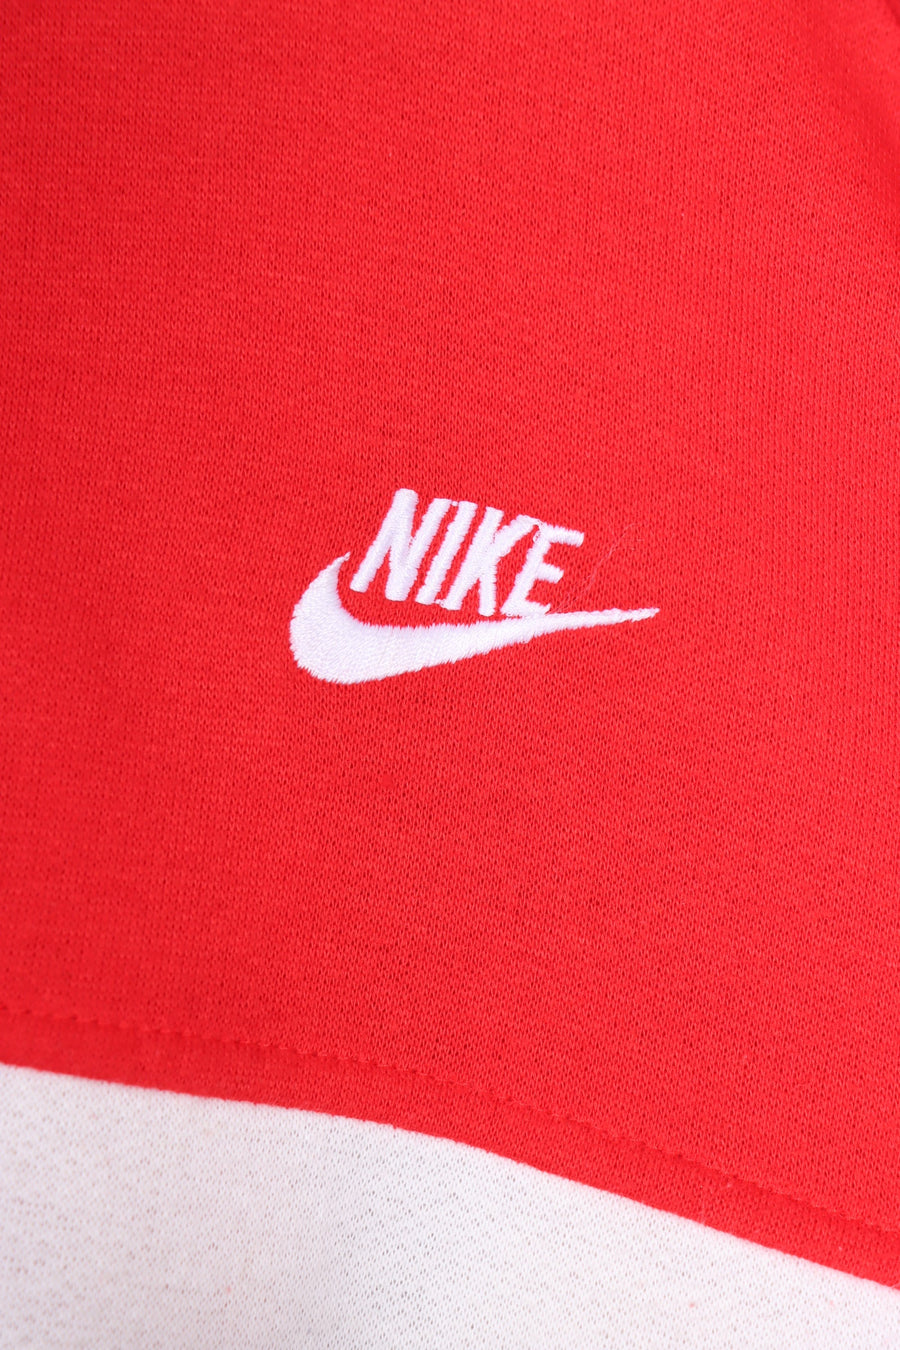 NIKE Red White Grey Colour Block Full Zip Track Jacket (XL)